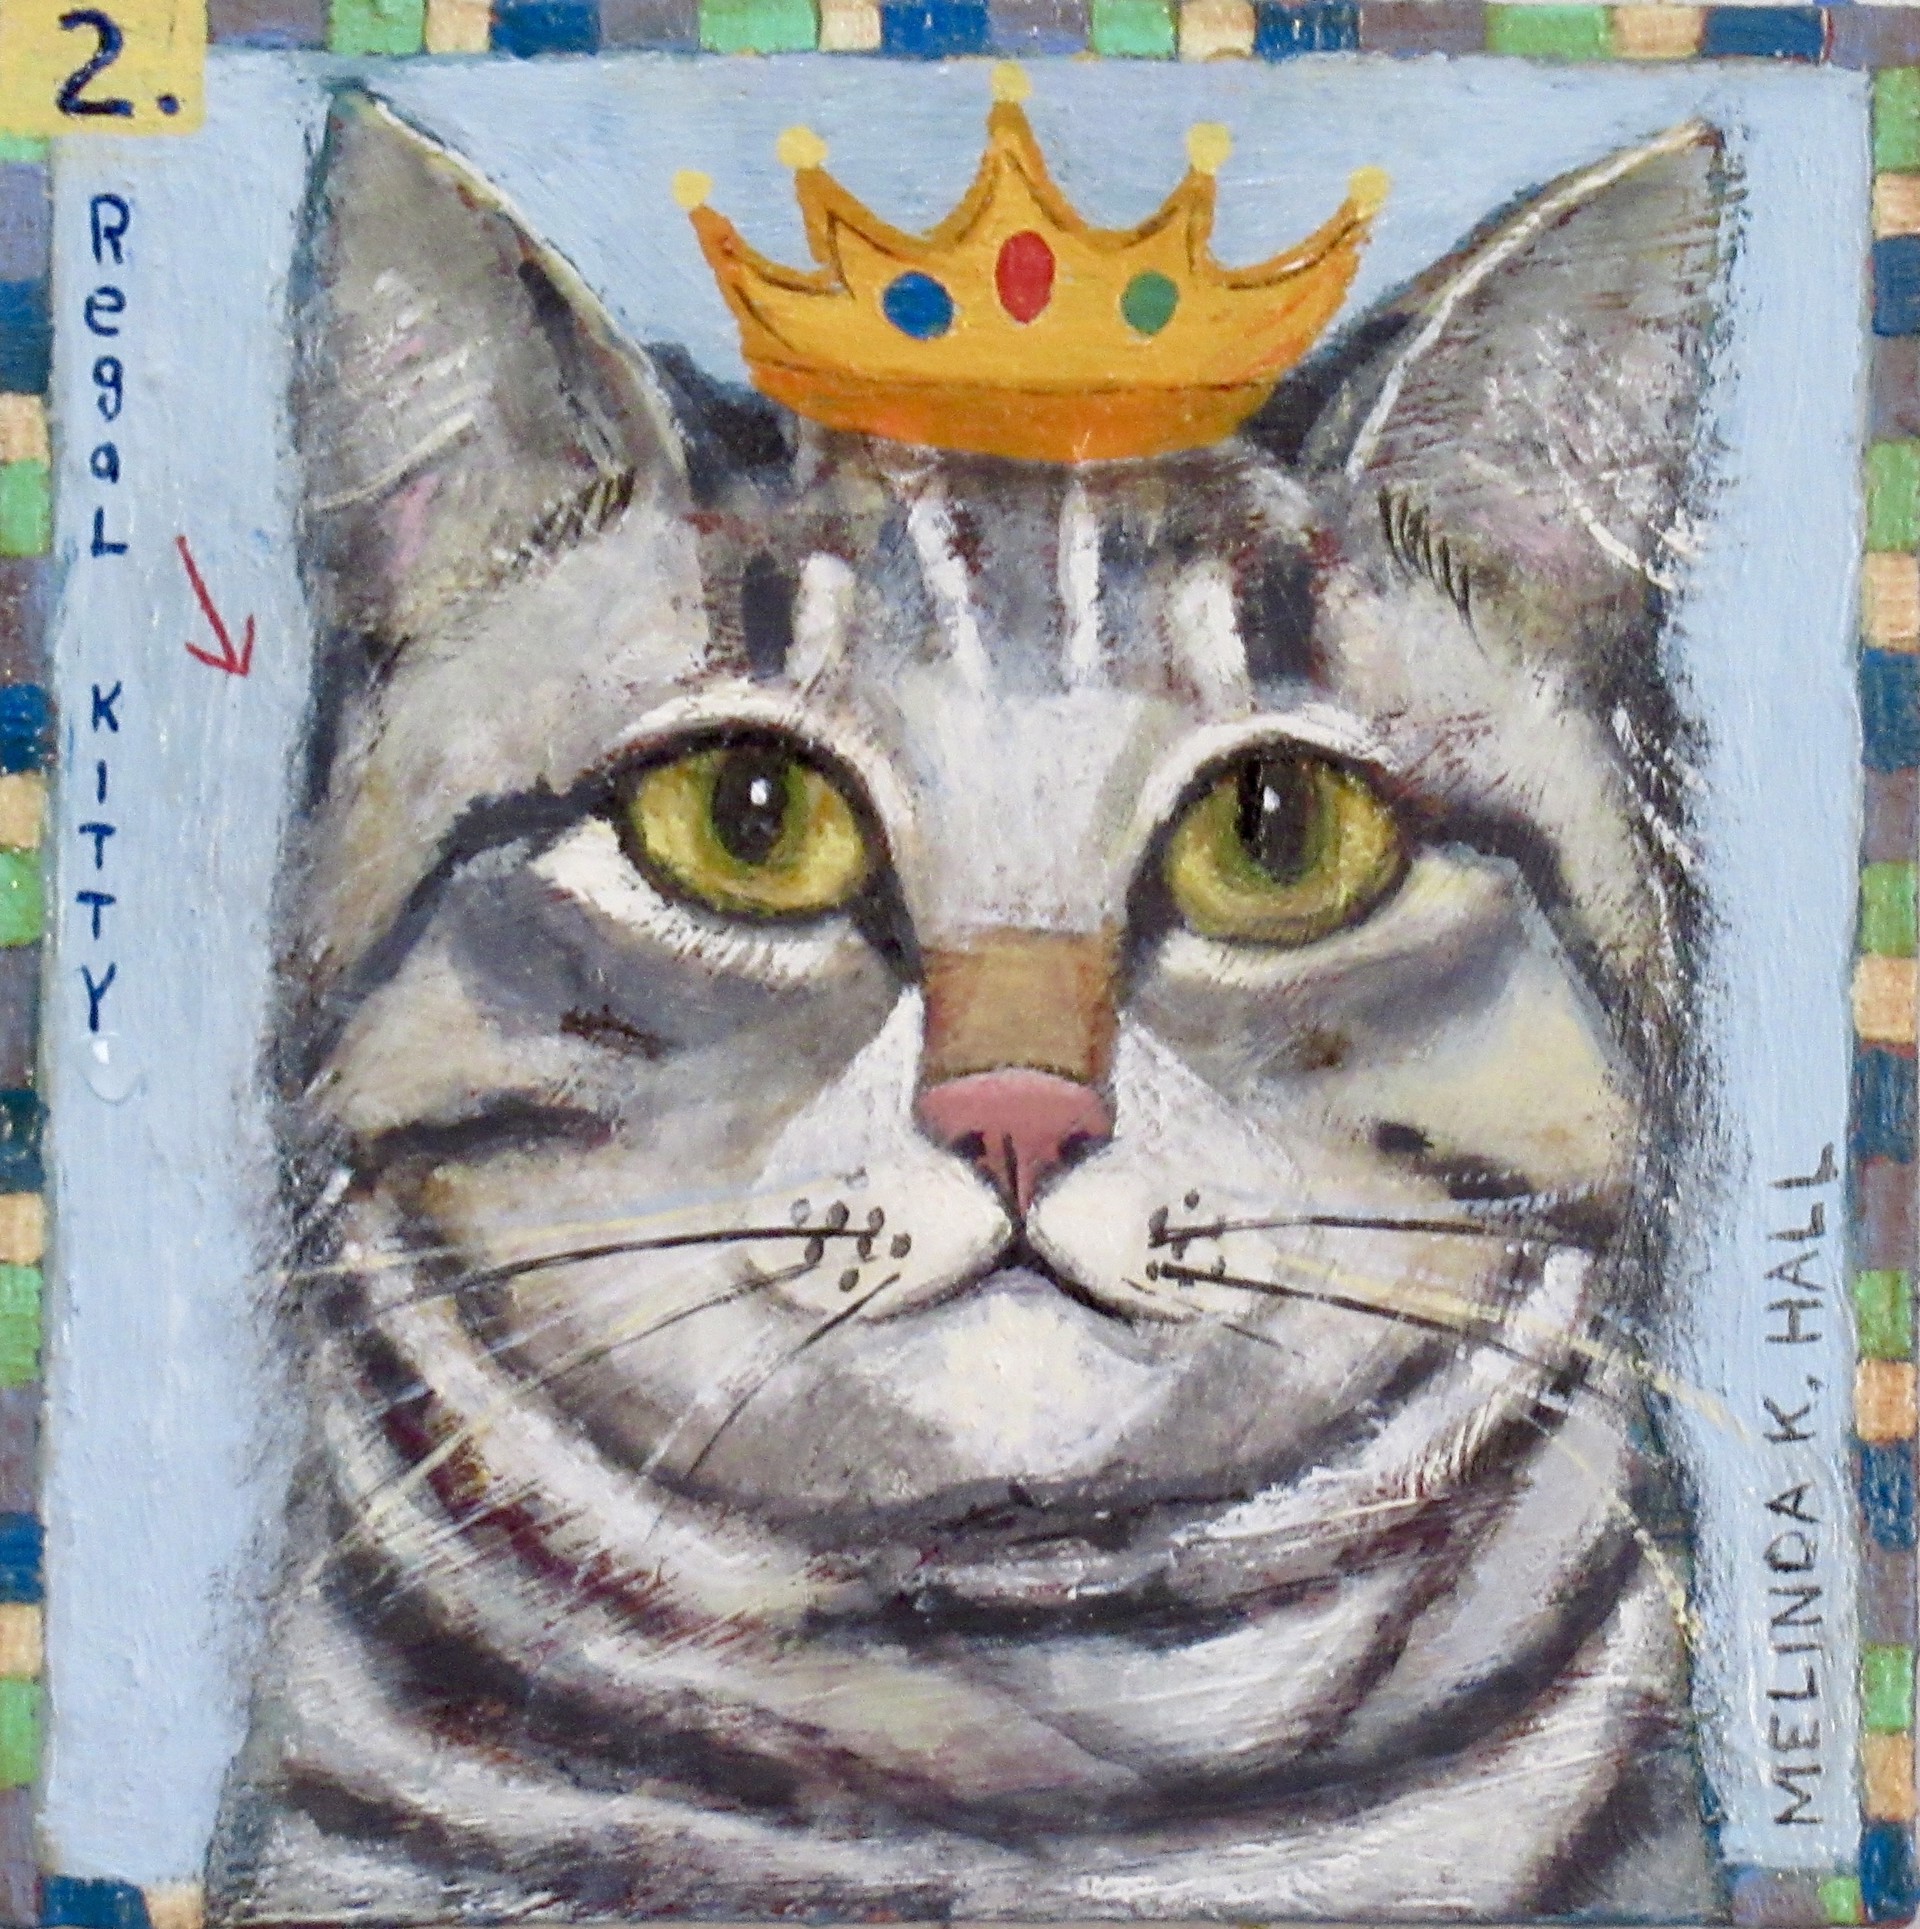 Regal Kitty #2 by Melinda K. Hall